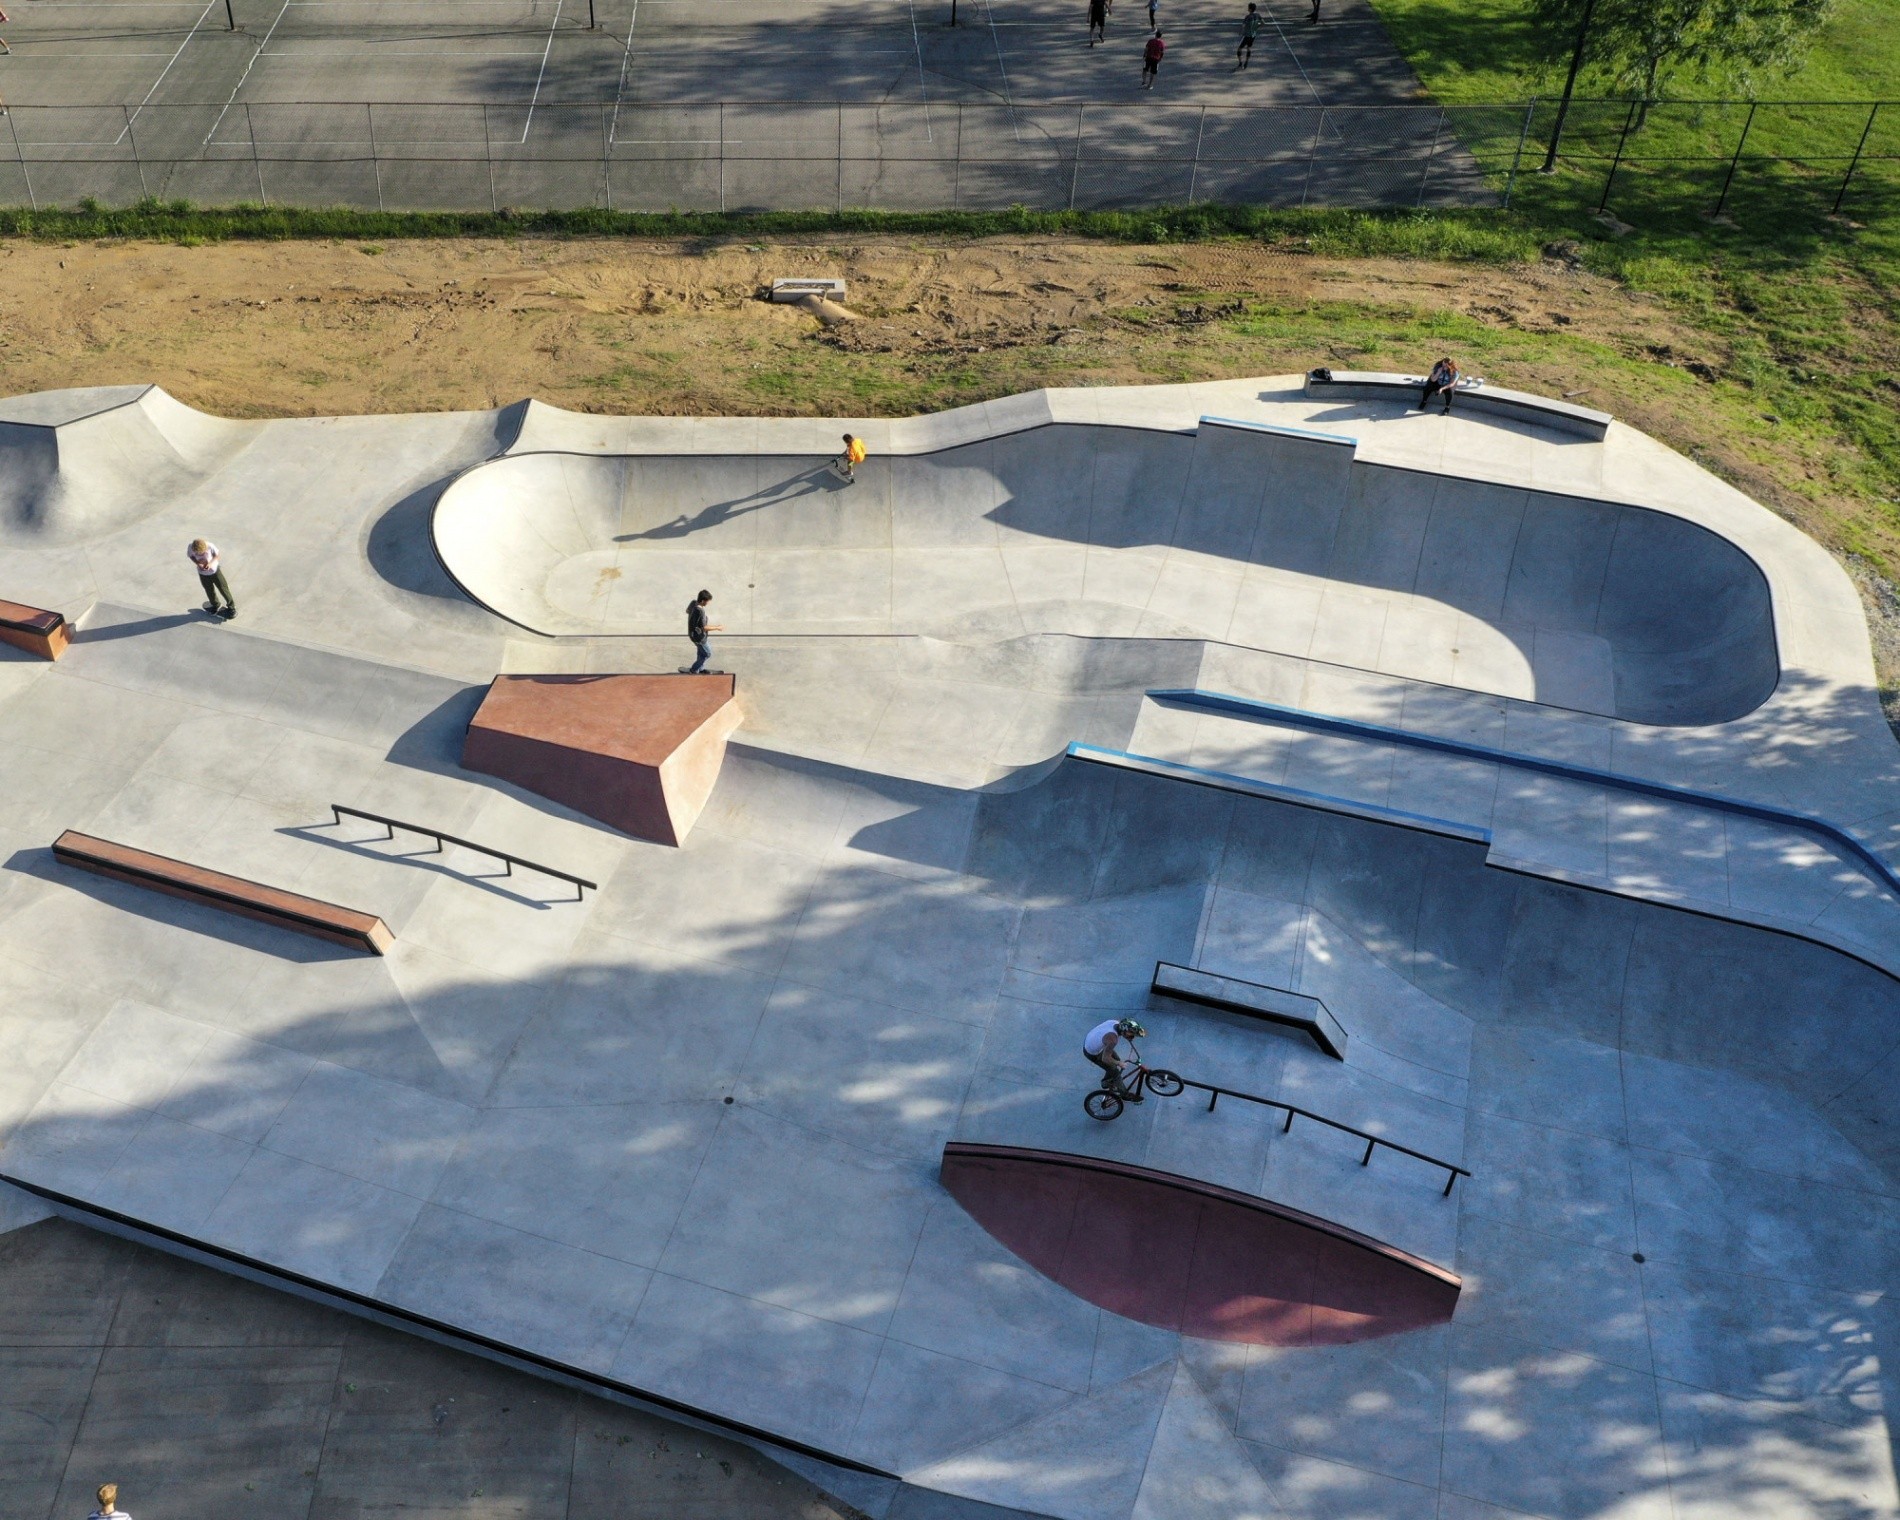 Jolie Crider Memorial skatepark